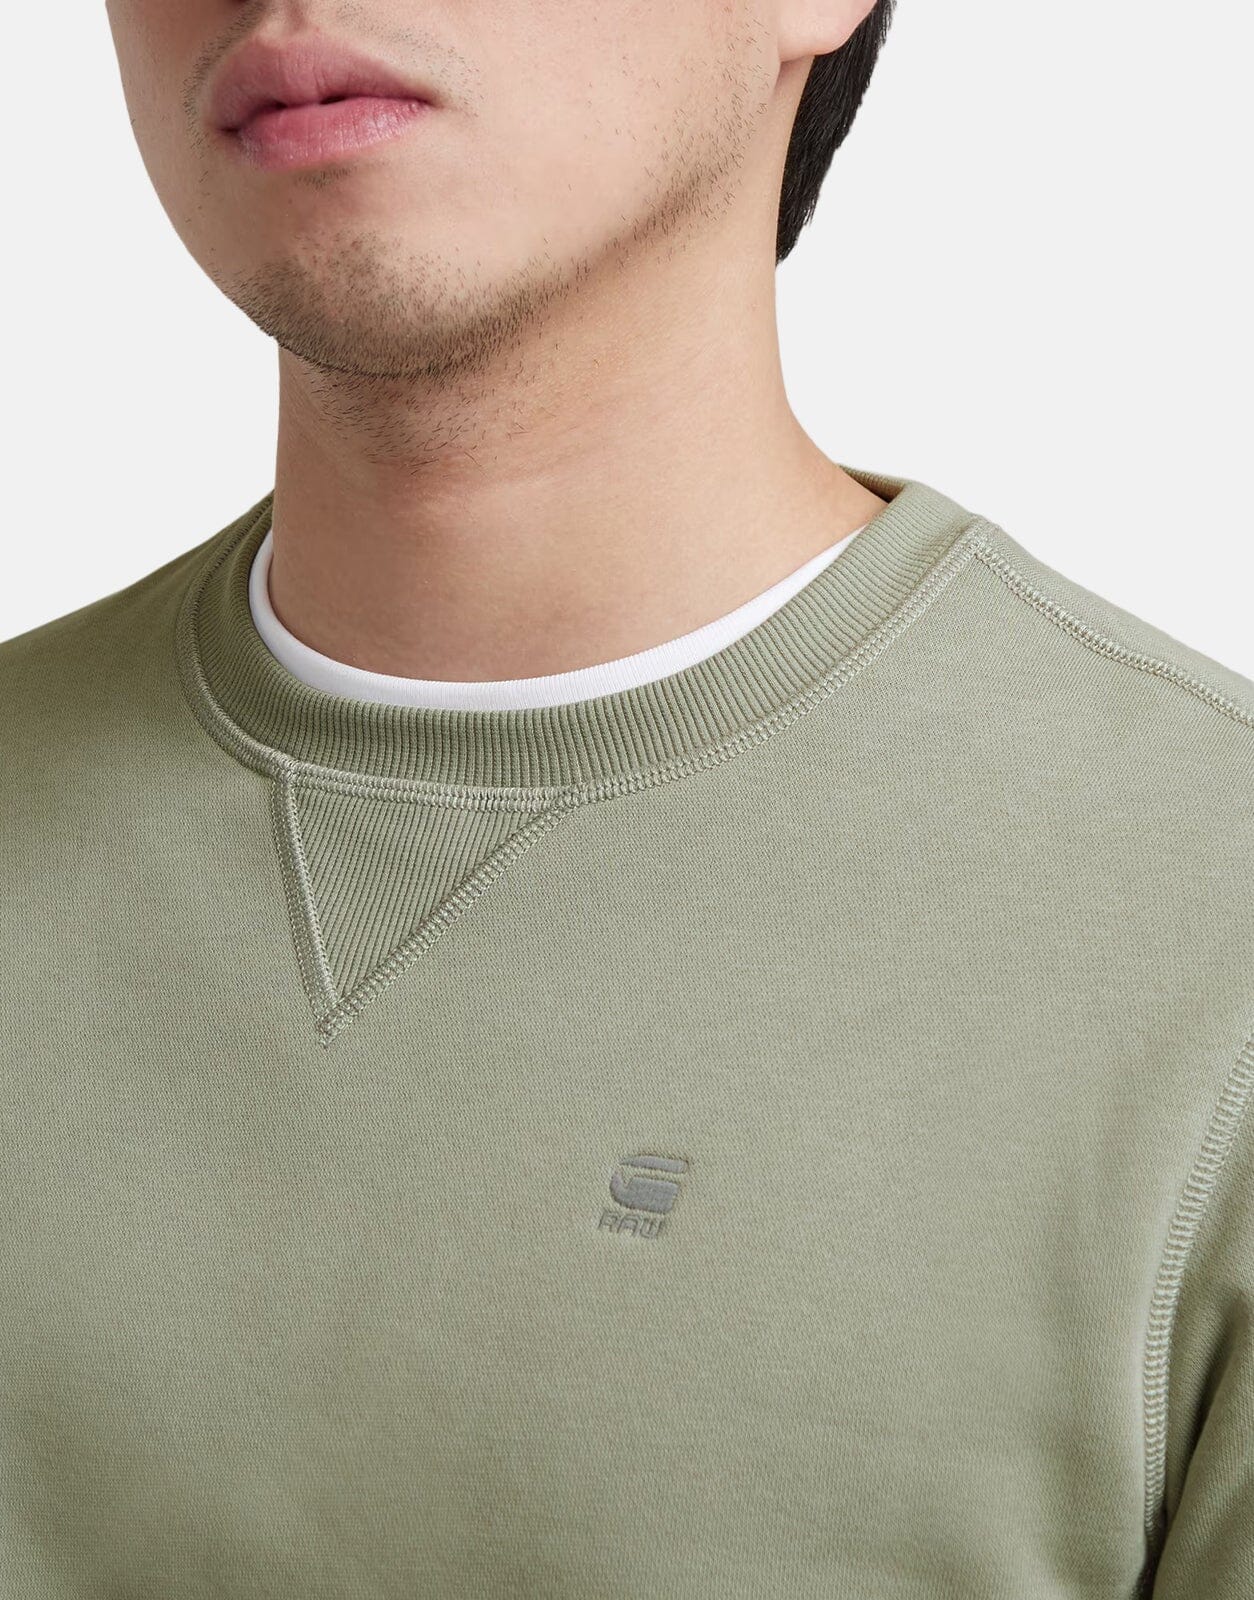 G-Star RAW Premium Core Sweatshirt Green - Subwear